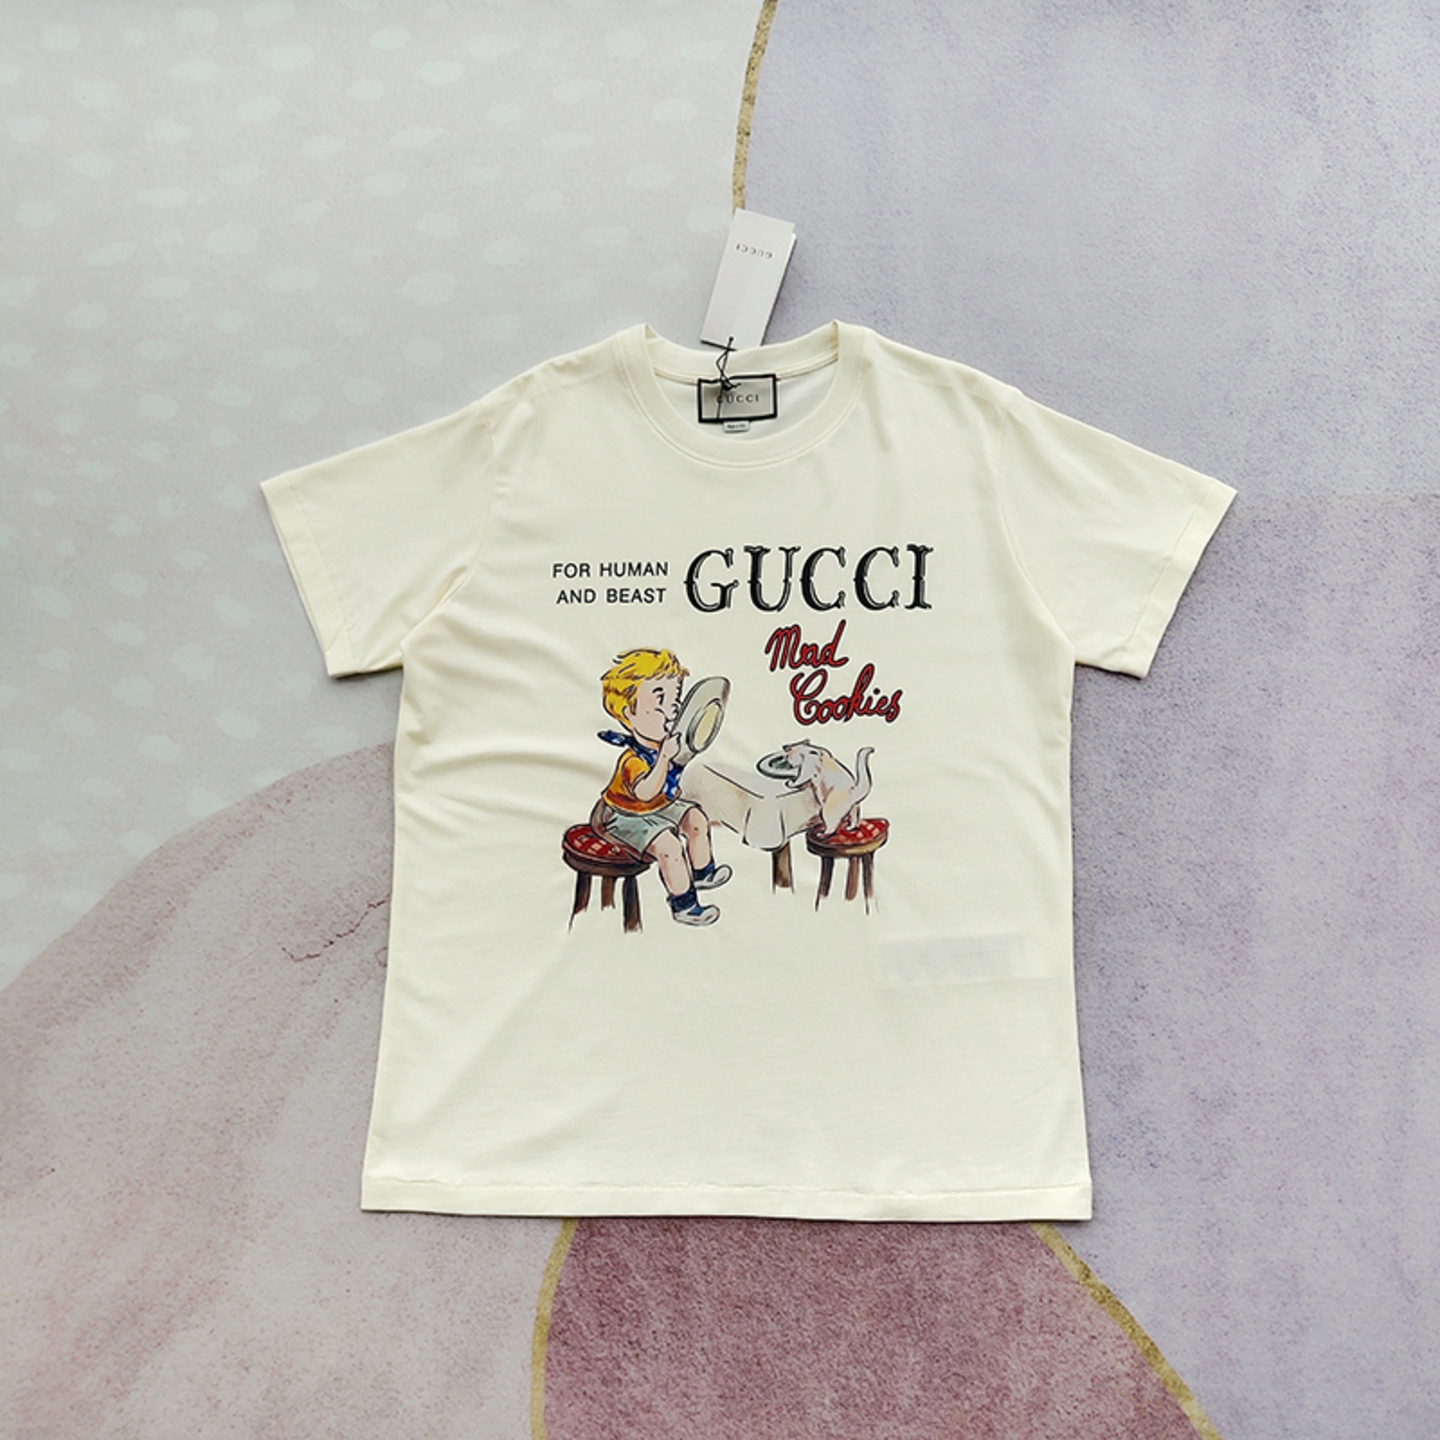 Gucci 'Mad Cookies' print T-shirt